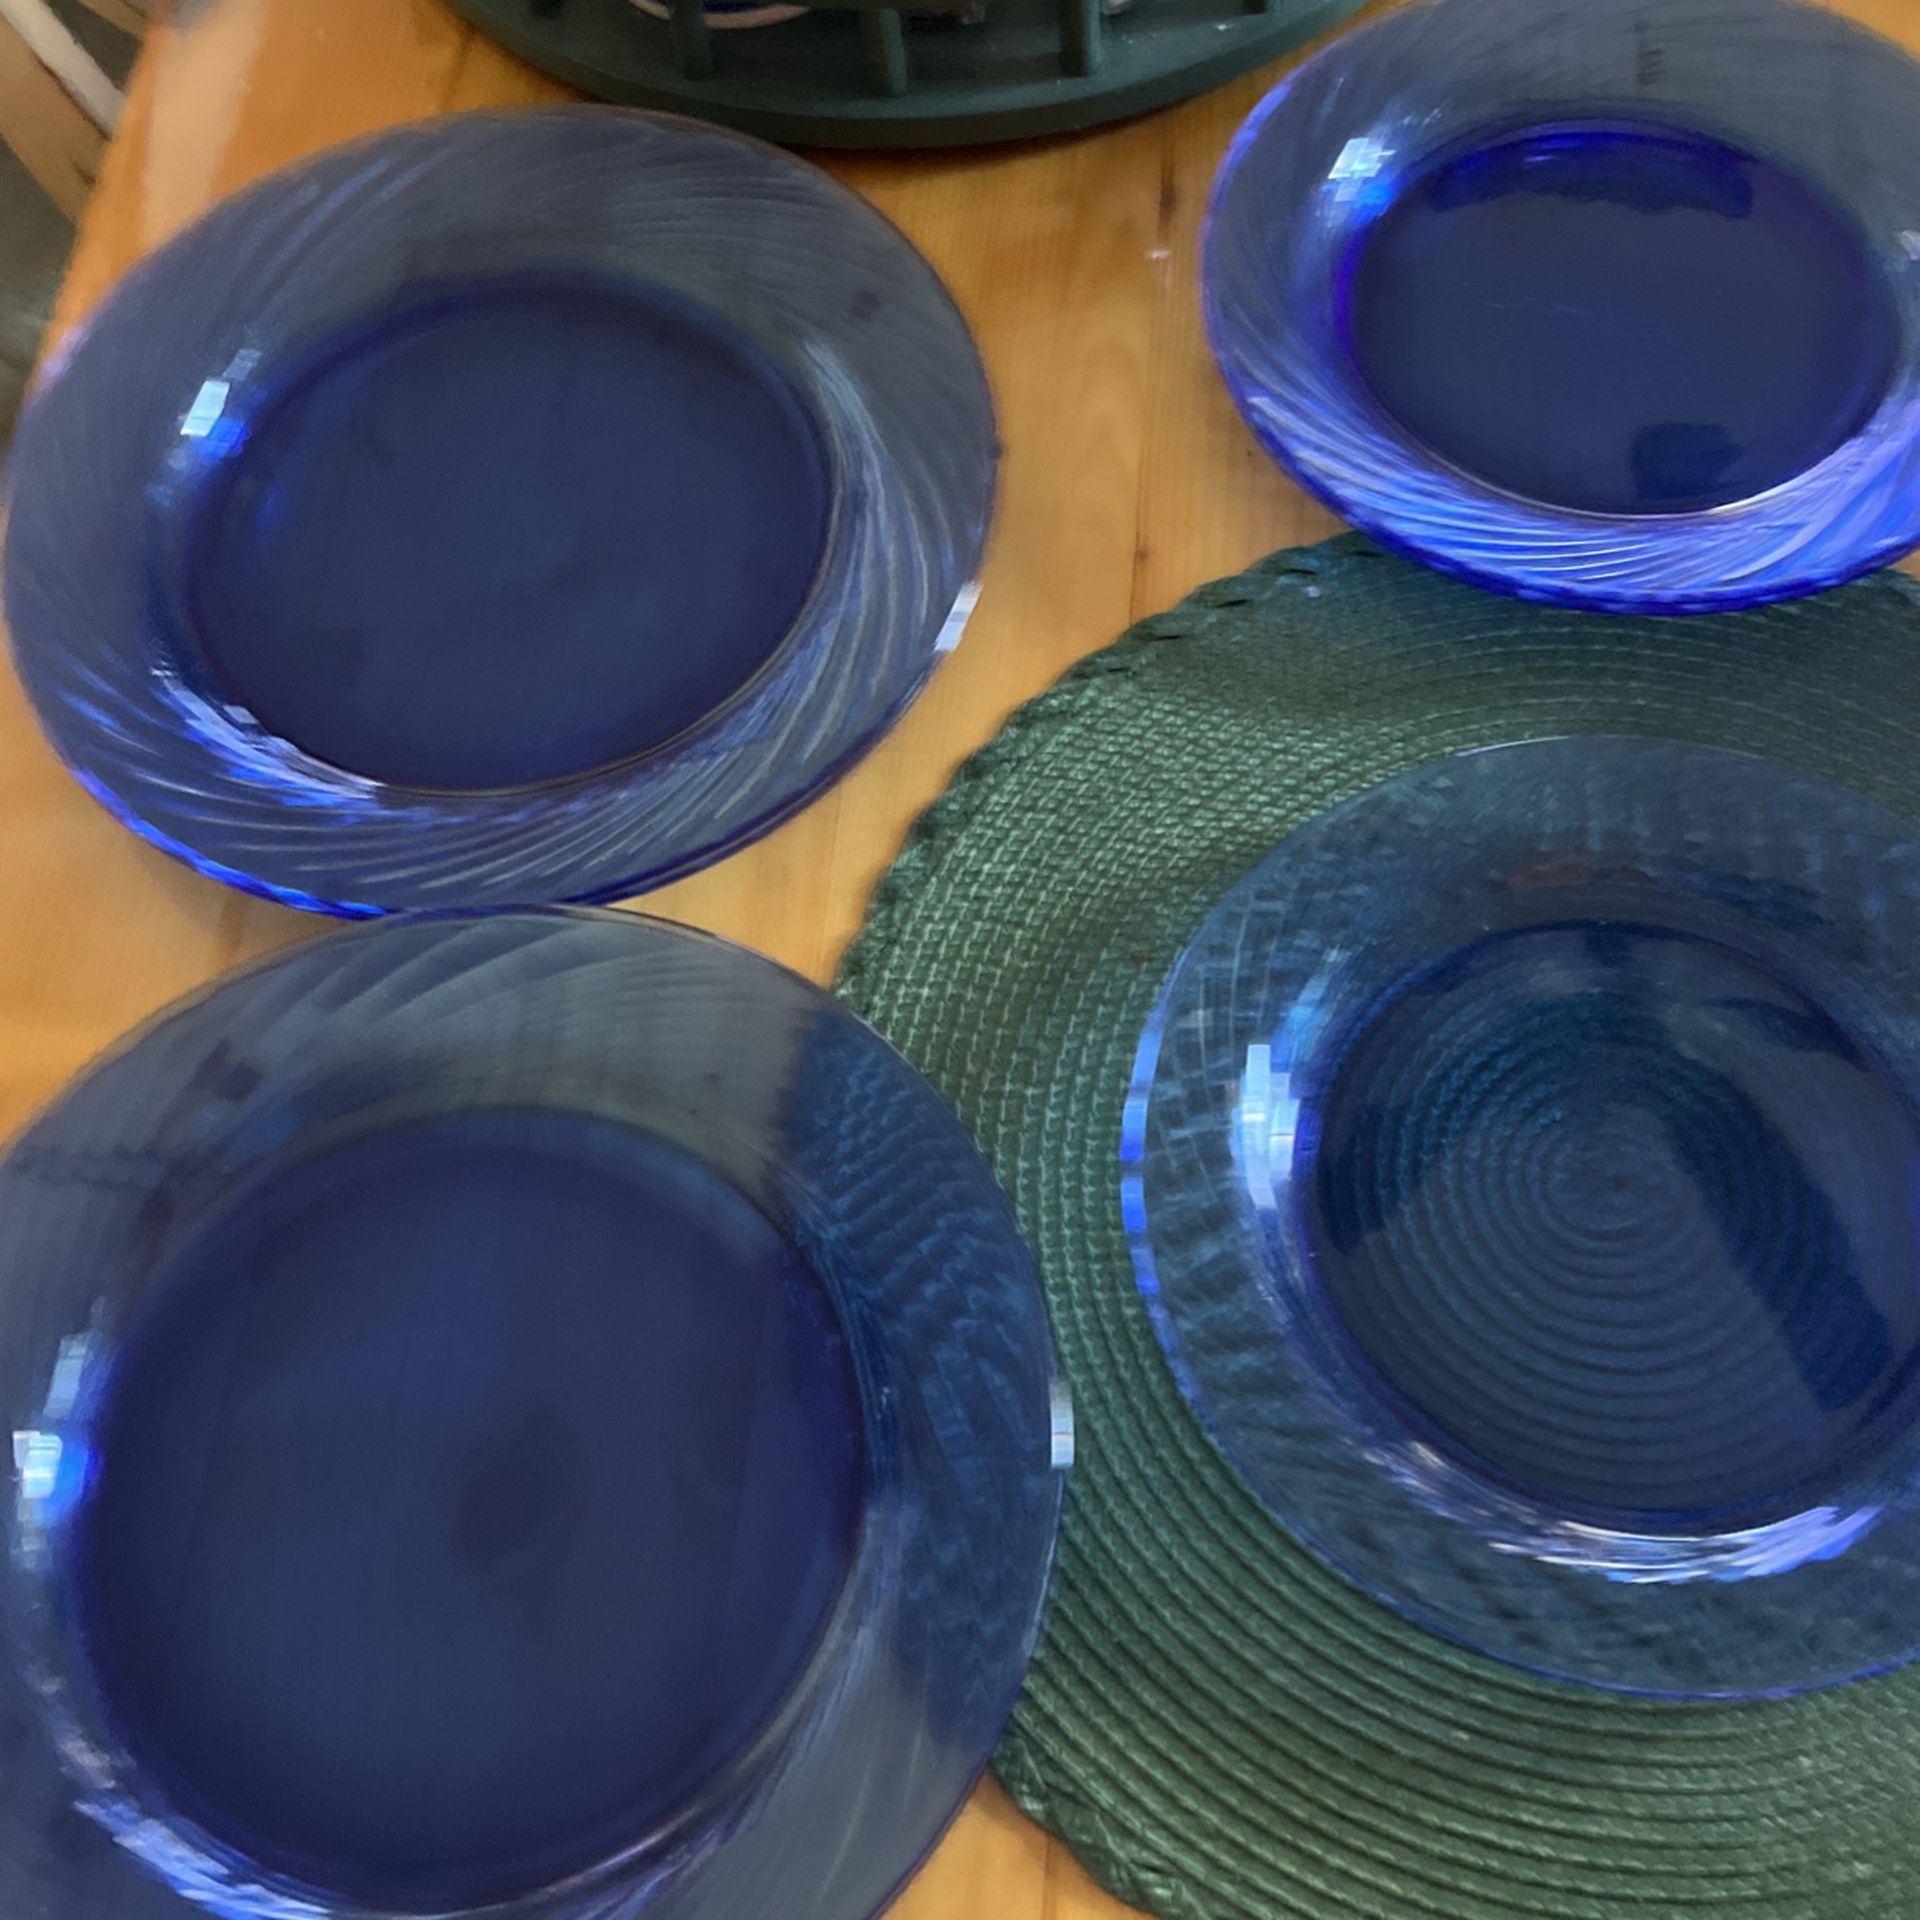 Cobalt Blue Plates And Bowls